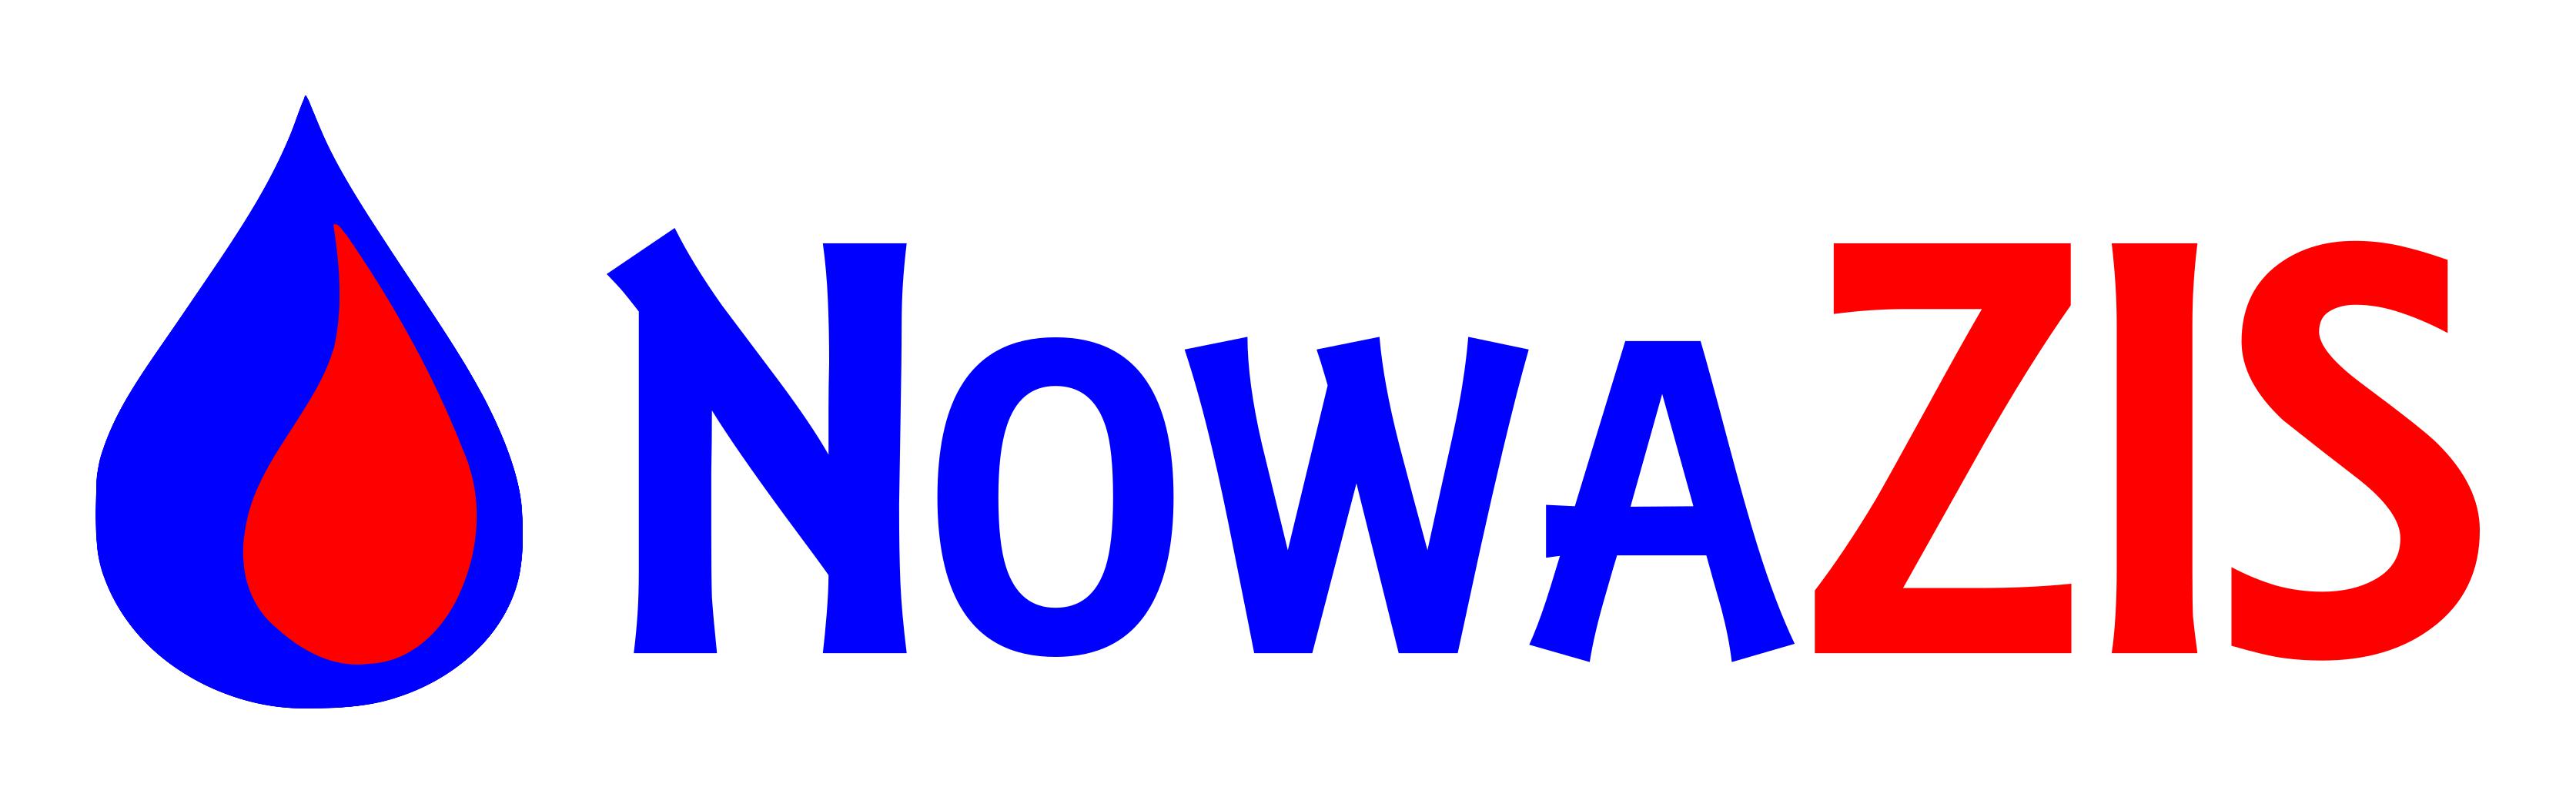 Logo Nowazis